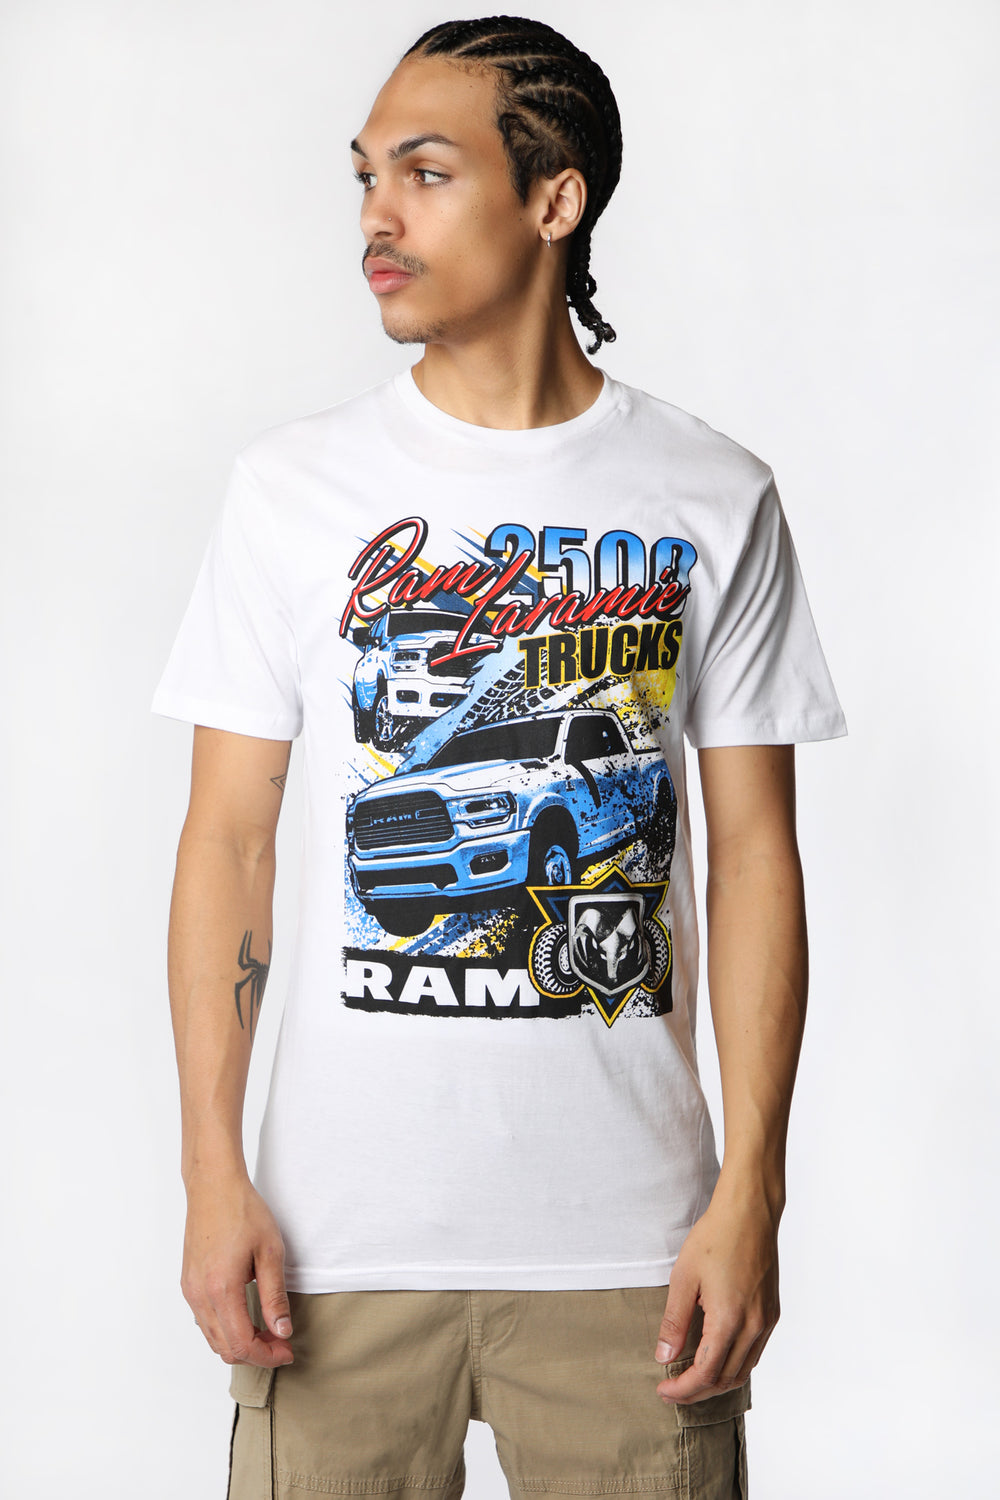 T-Shirt Imprimé Ram 2500 Laramie Trucks Homme T-Shirt Imprimé Ram 2500 Laramie Trucks Homme